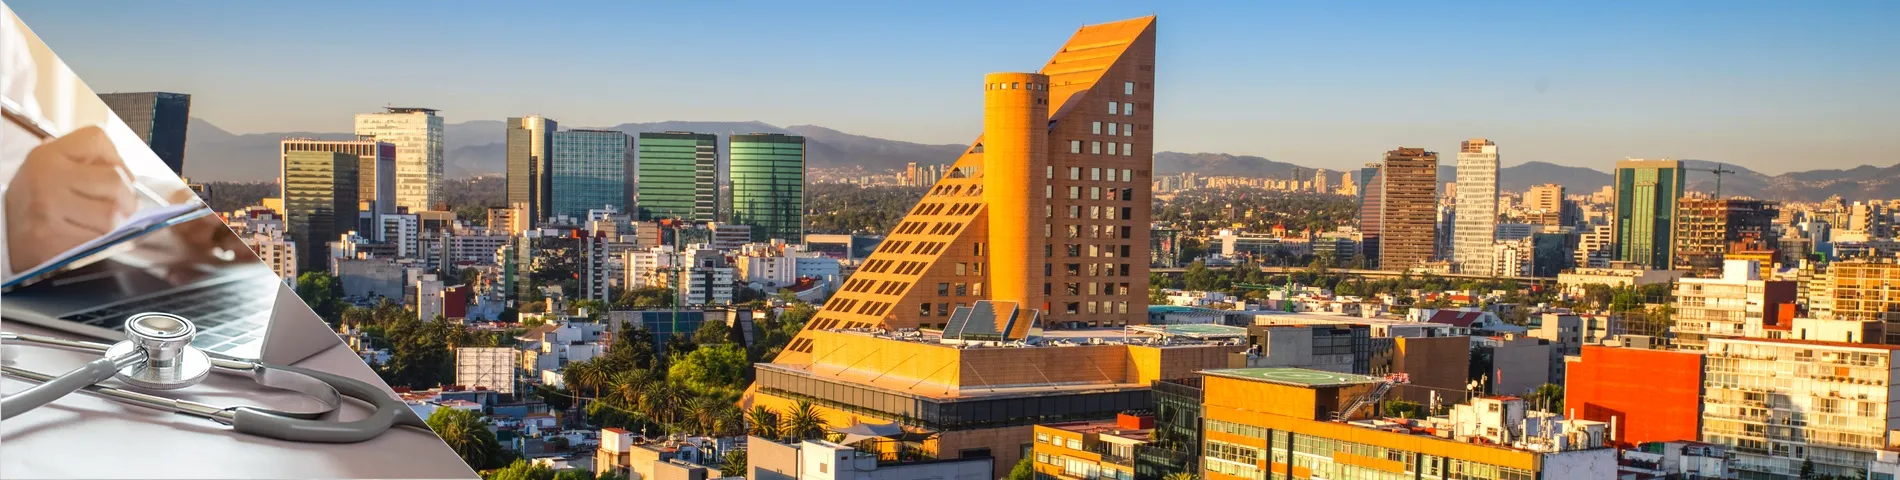 Ciutat de Mèxic - Espanyol Mèdic